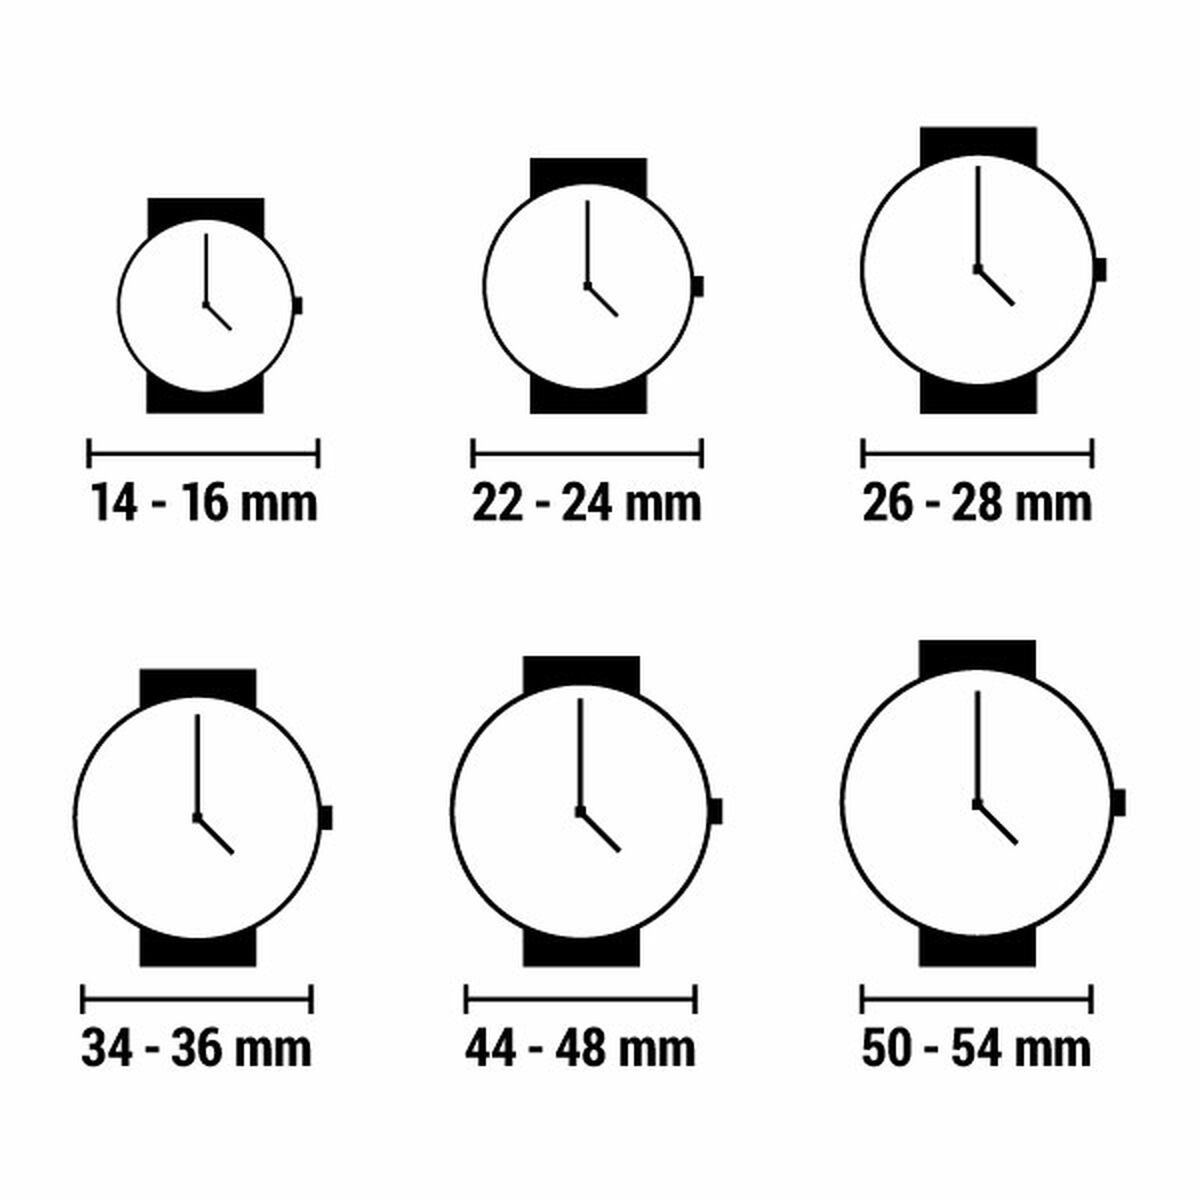 Horloge Dames Folli Follie WF16R014BPS (Ø 28 mm)